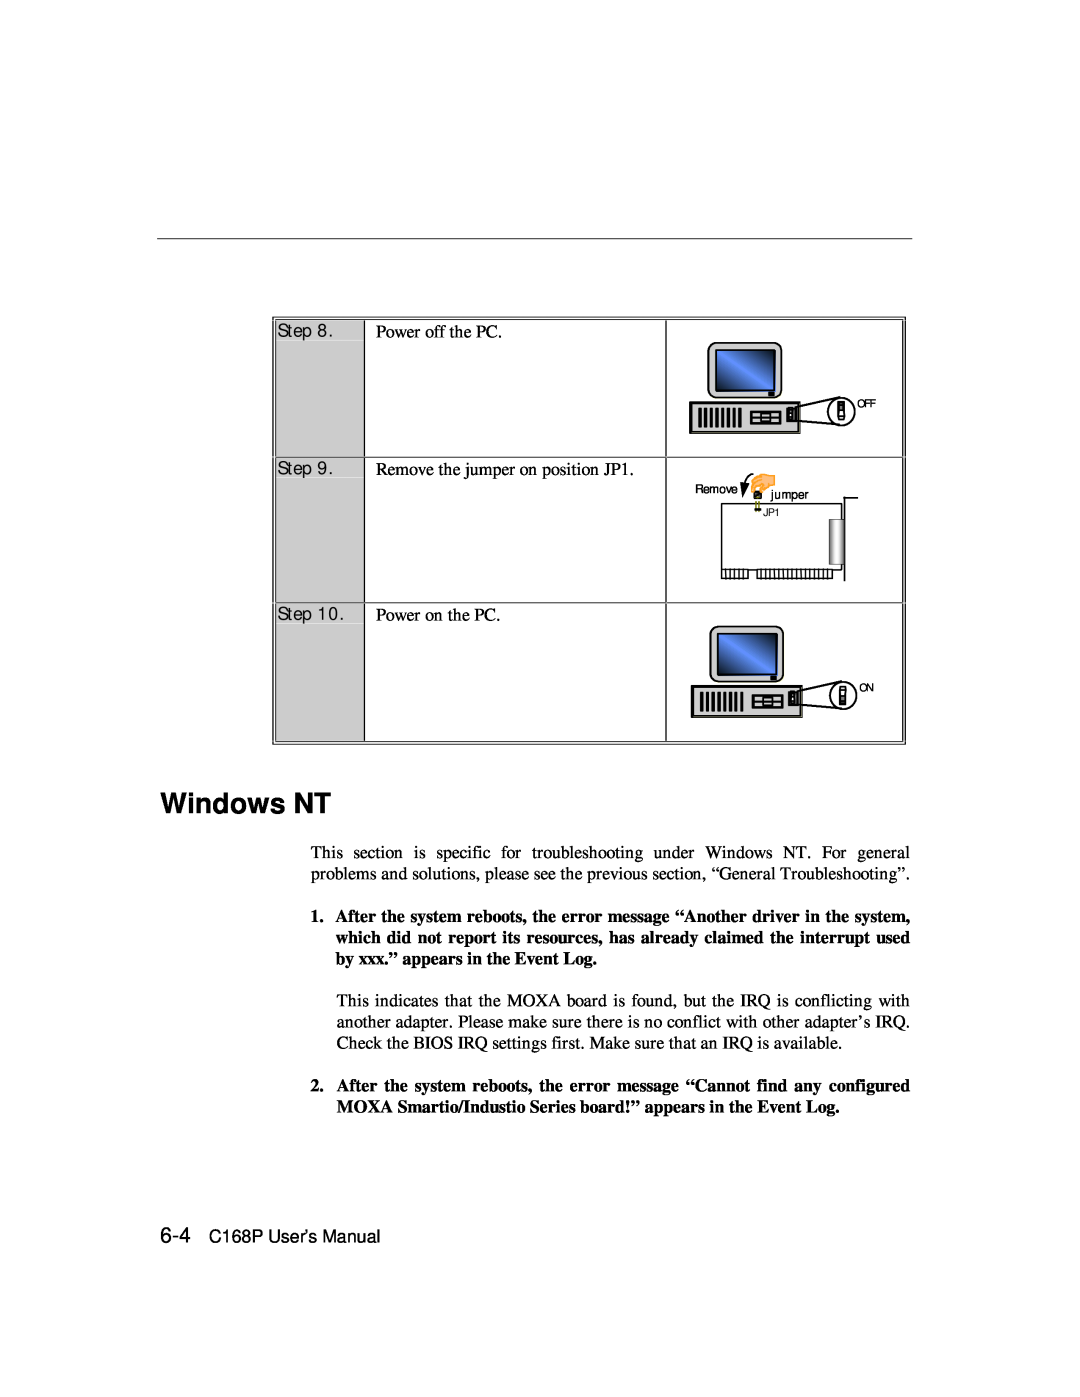 Moxa Technologies C168P user manual Windows NT, Power off the PC 